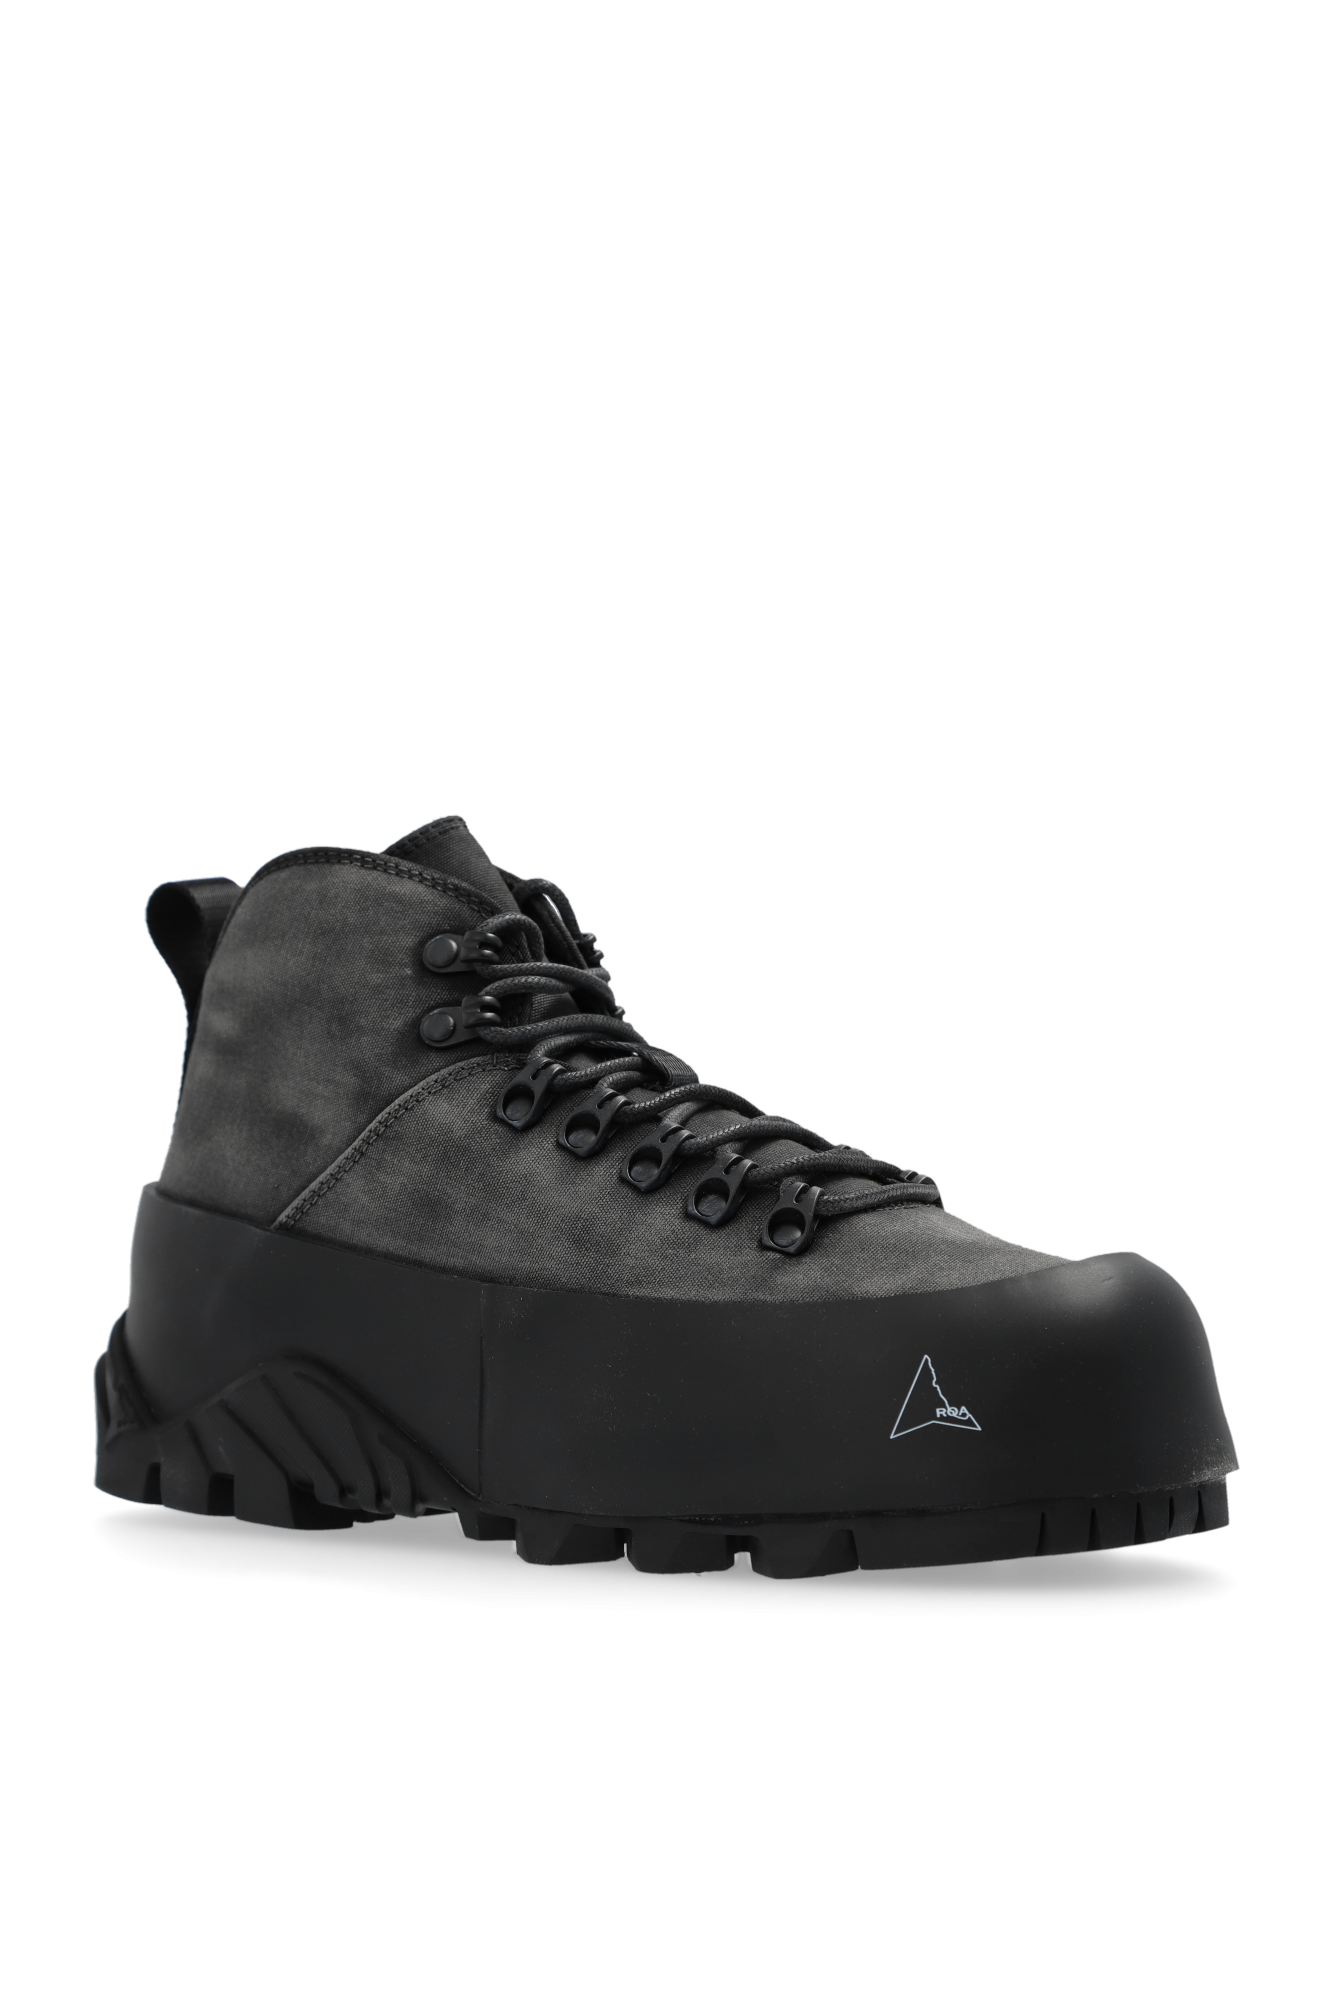 ROA ‘CVO’ hiking boots